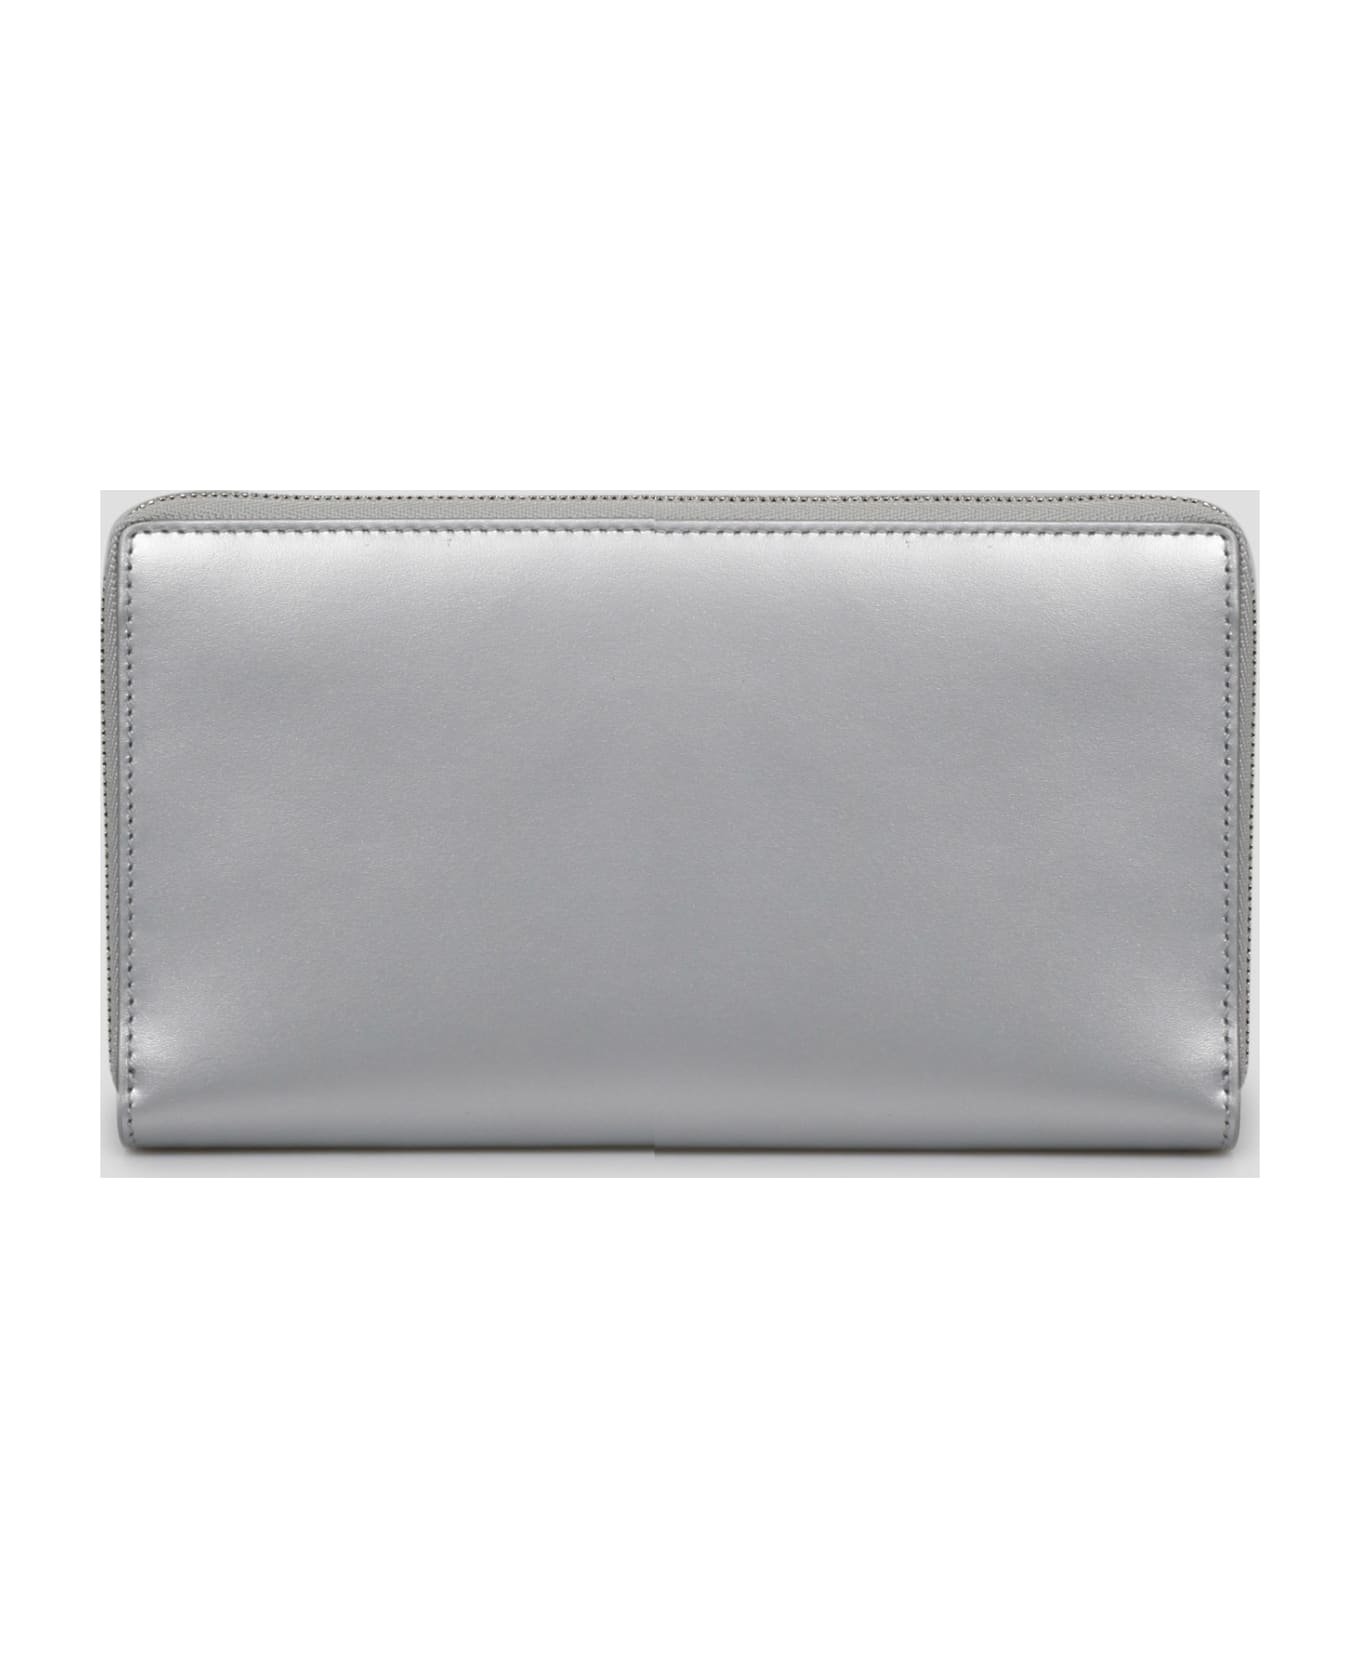 Balenciaga Essential Continental Wallett - Silver/black 財布